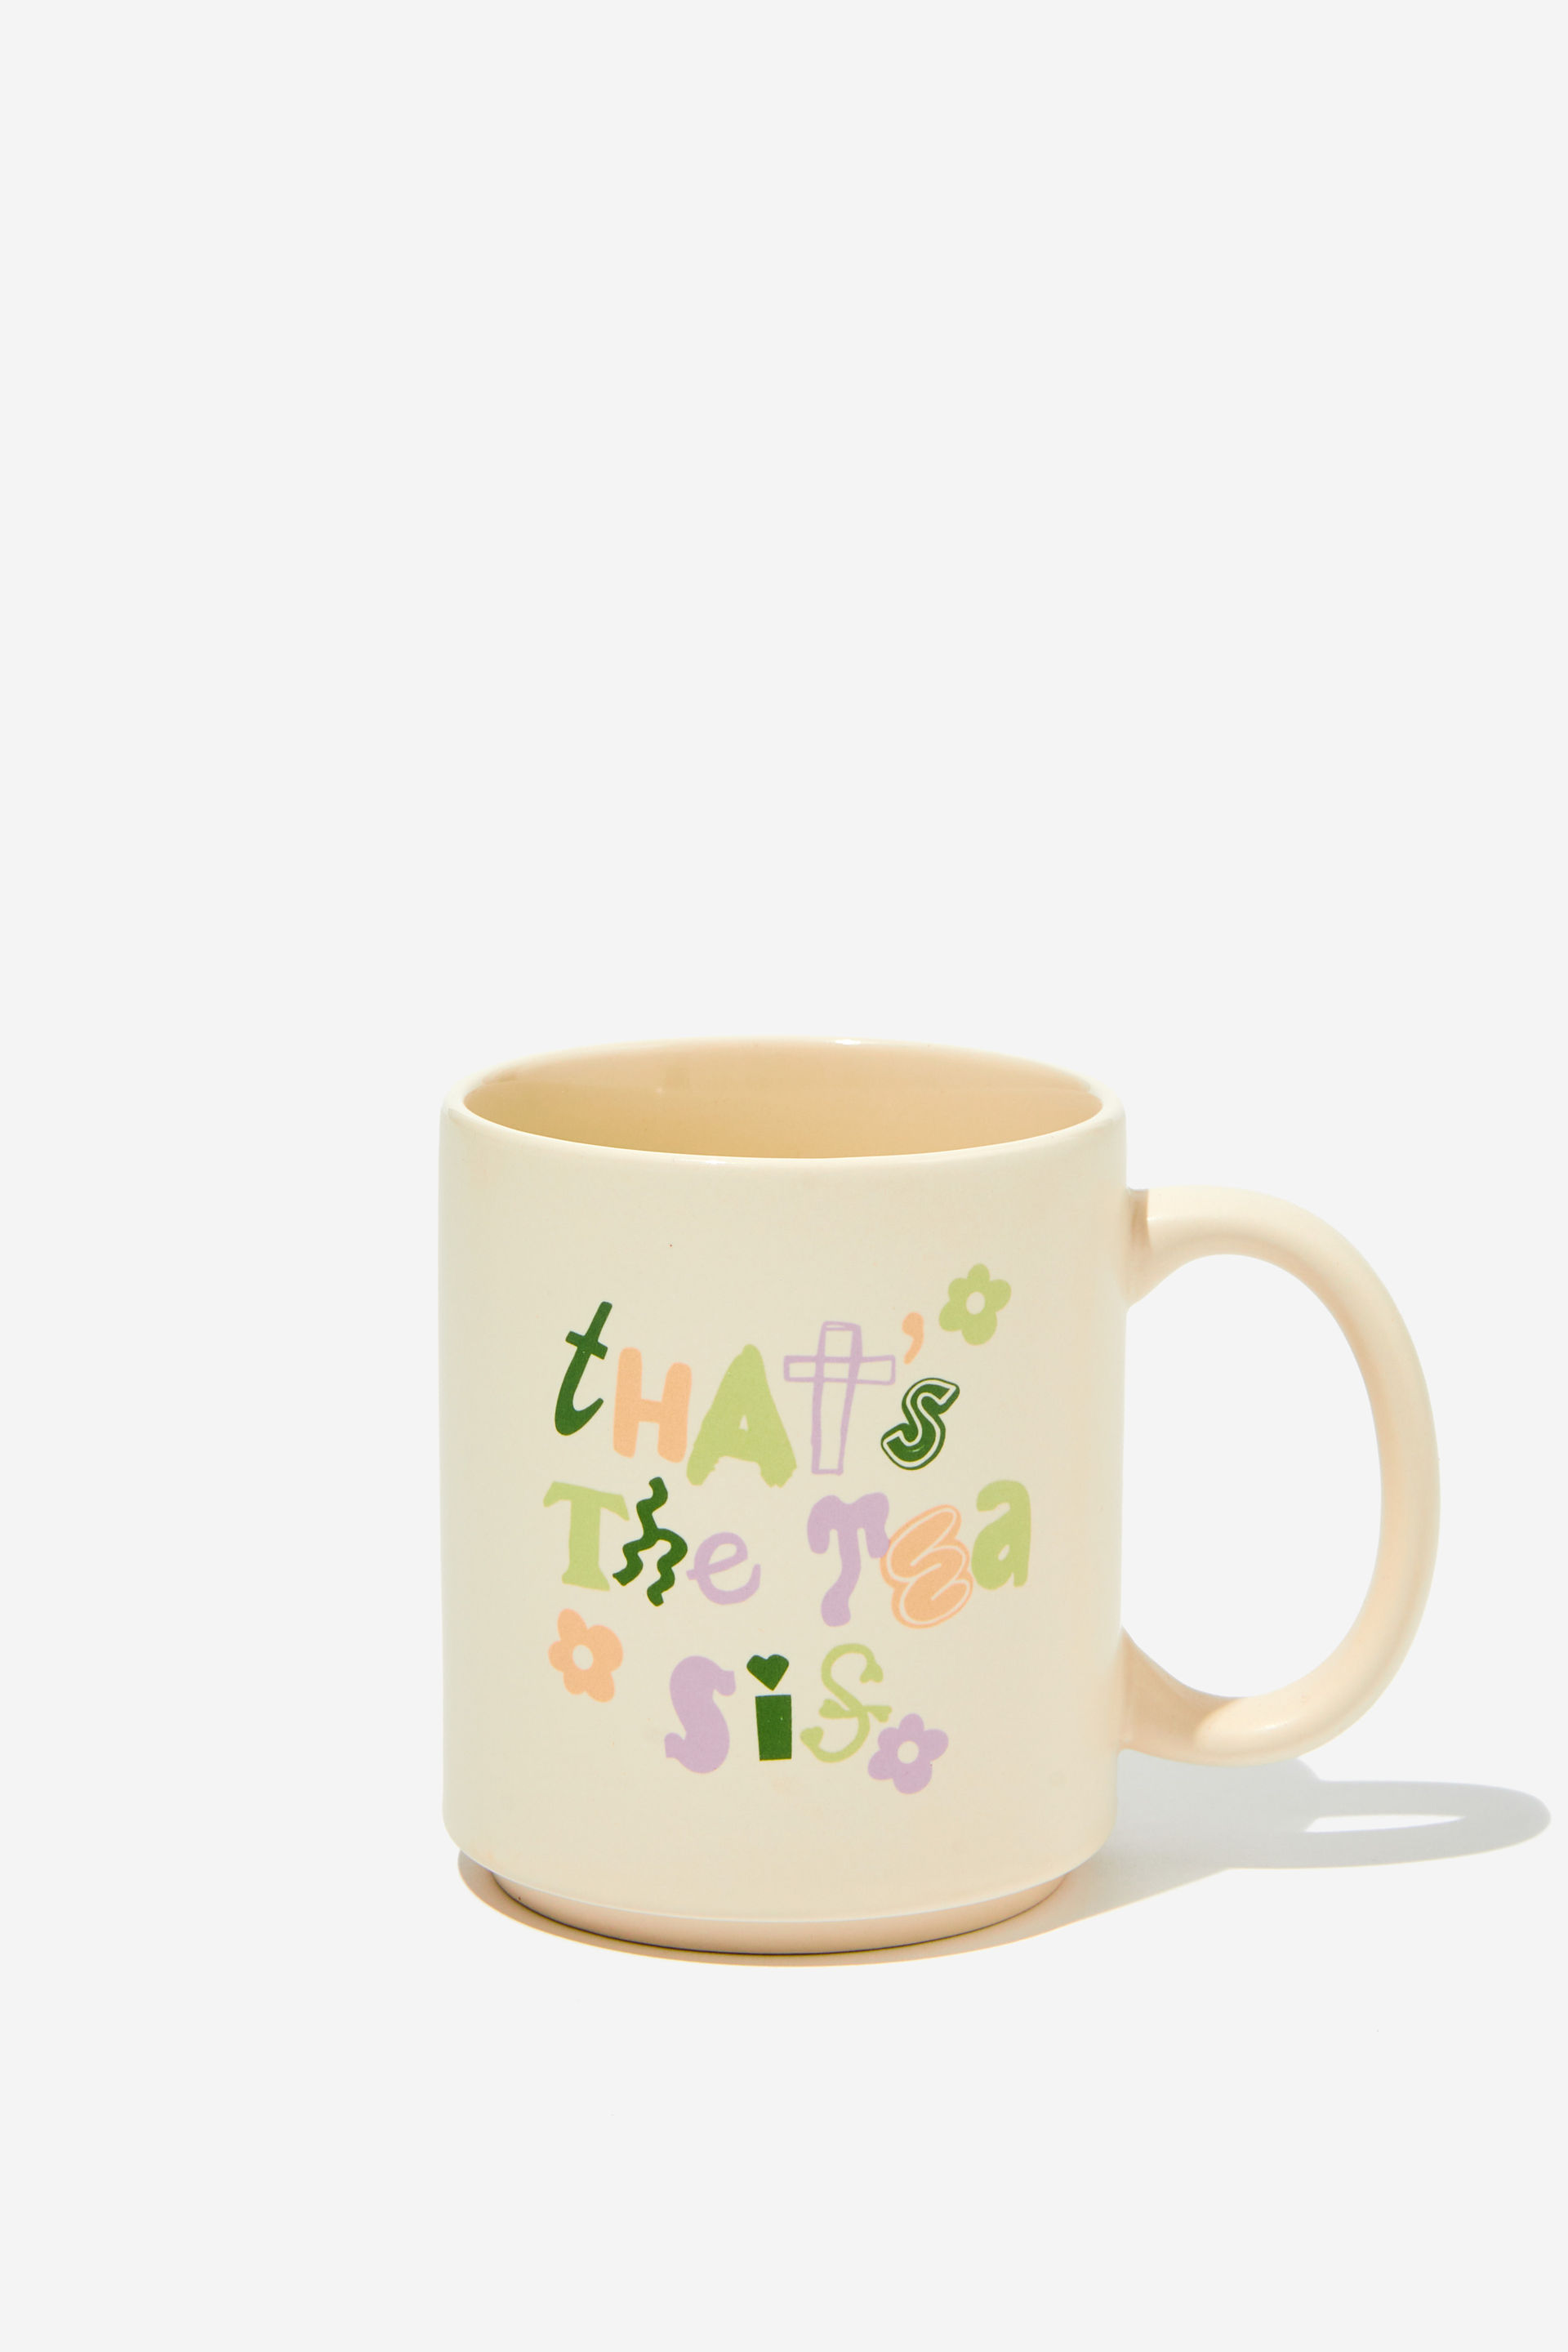 Typo - Daily Mug - That’s the tea sis